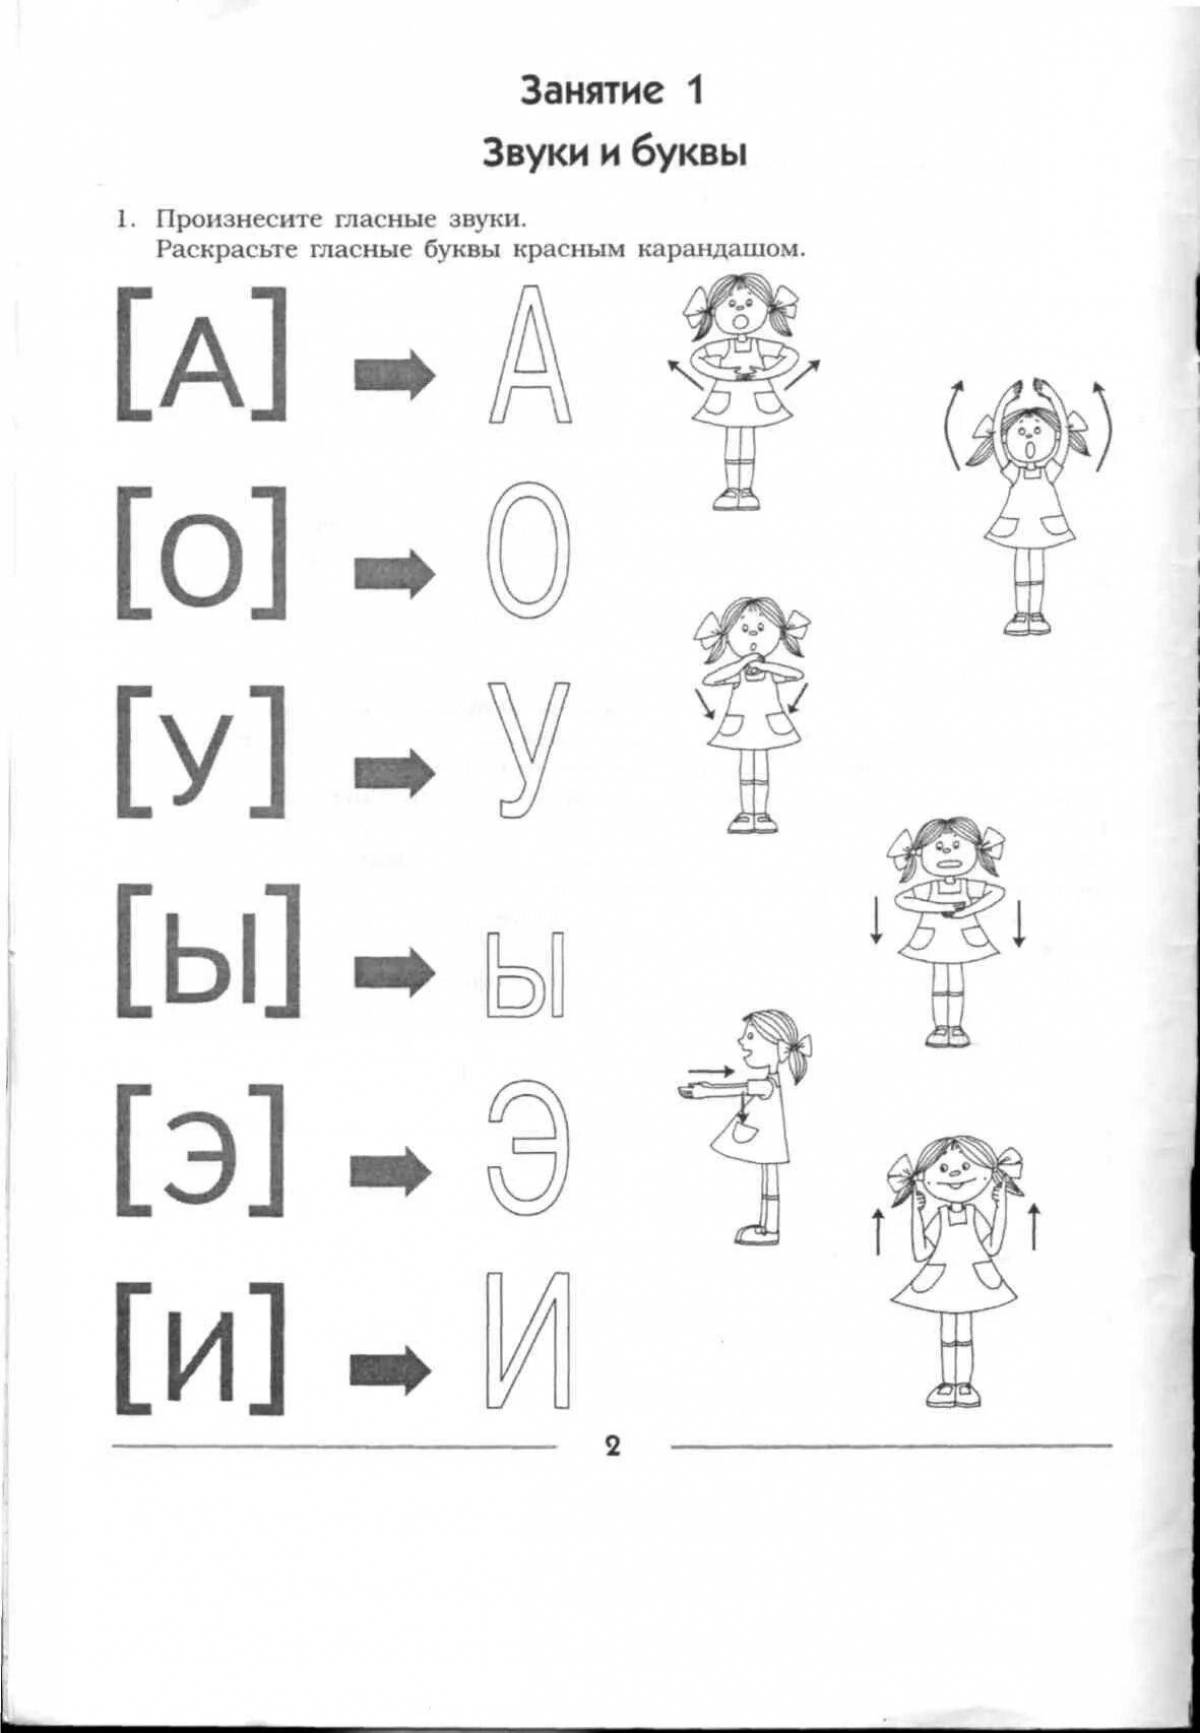 Vowels and consonants for preschoolers #16